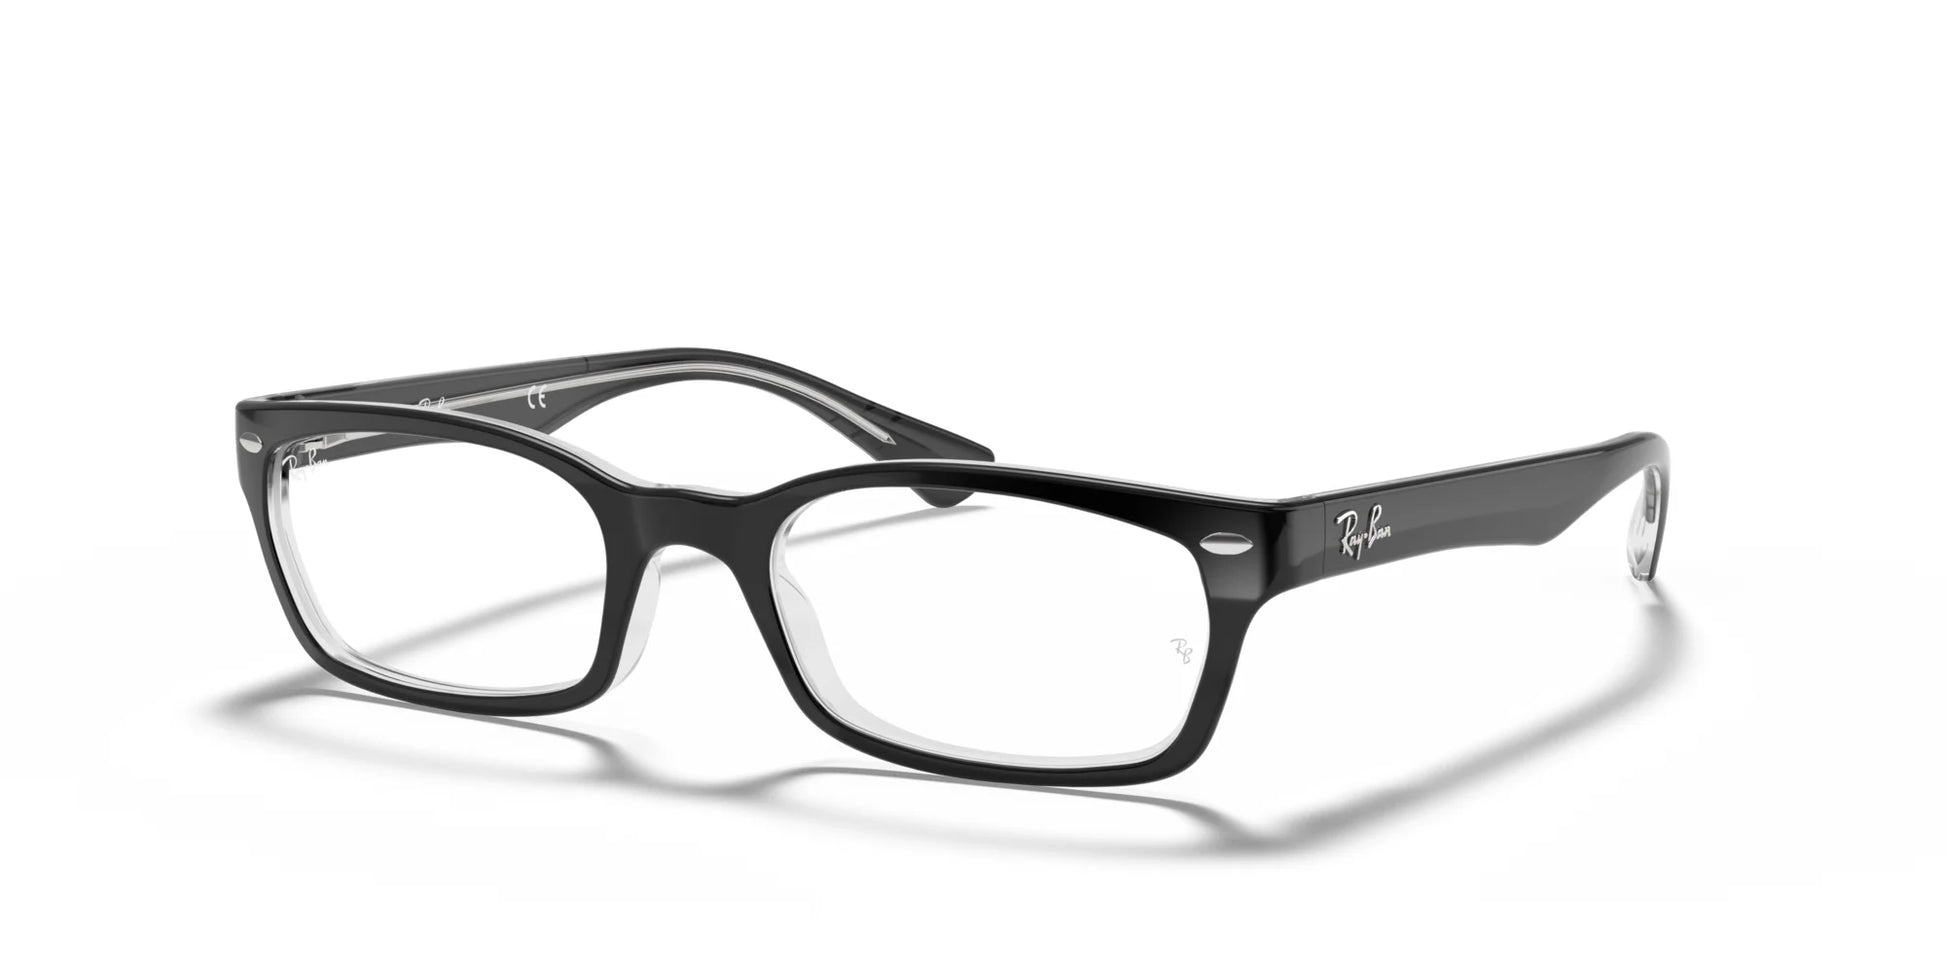 Ray-Ban RX5150 Eyeglasses Black On Transparent / Clear